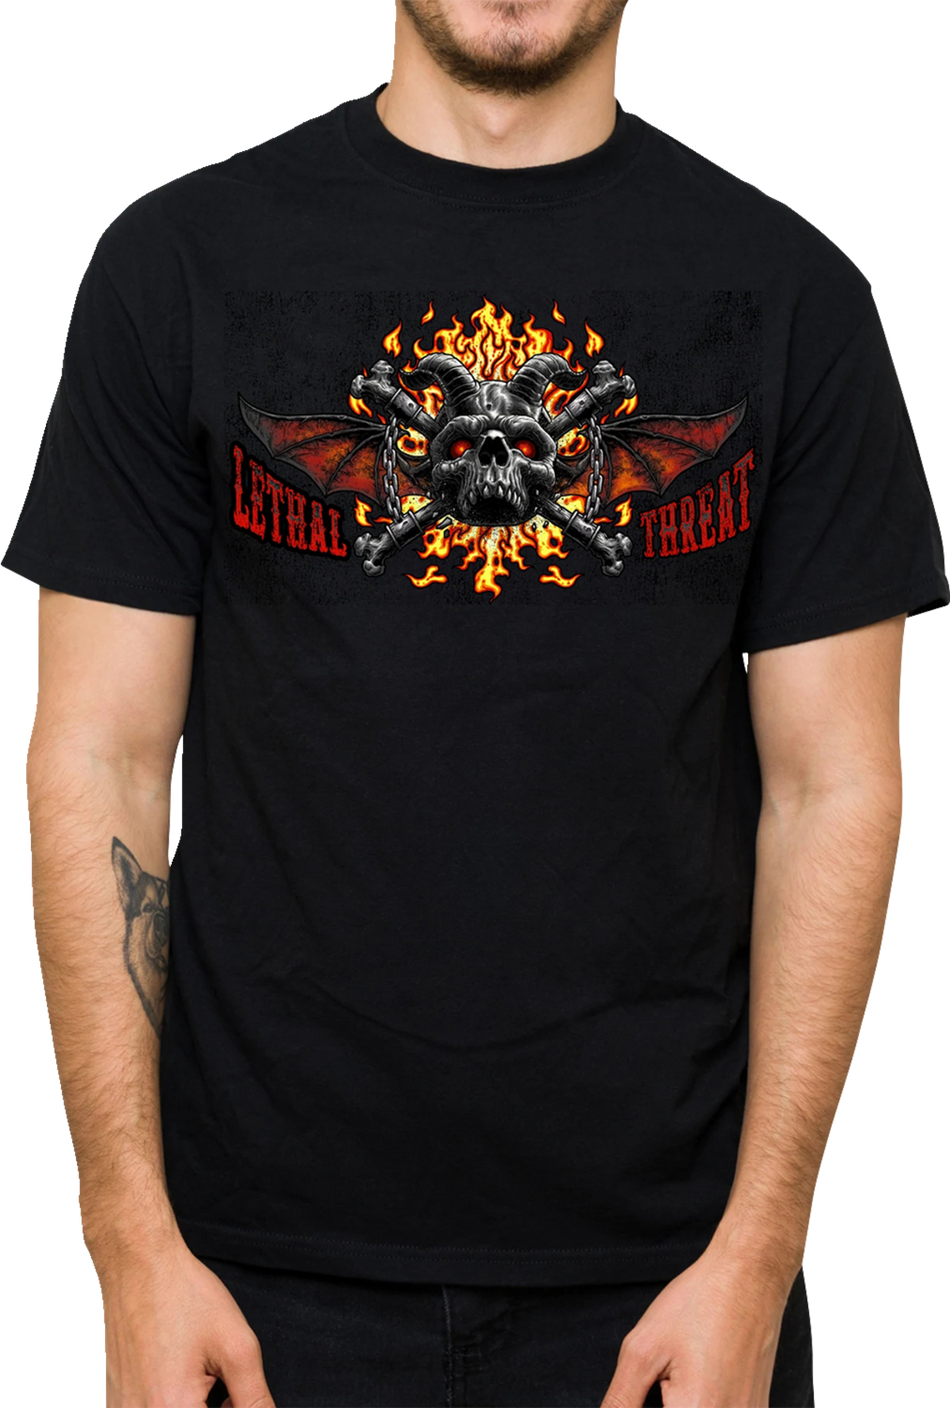 LETHAL THREAT Hell Was Full T-Shirt - Black - 2XL LT20901XXL